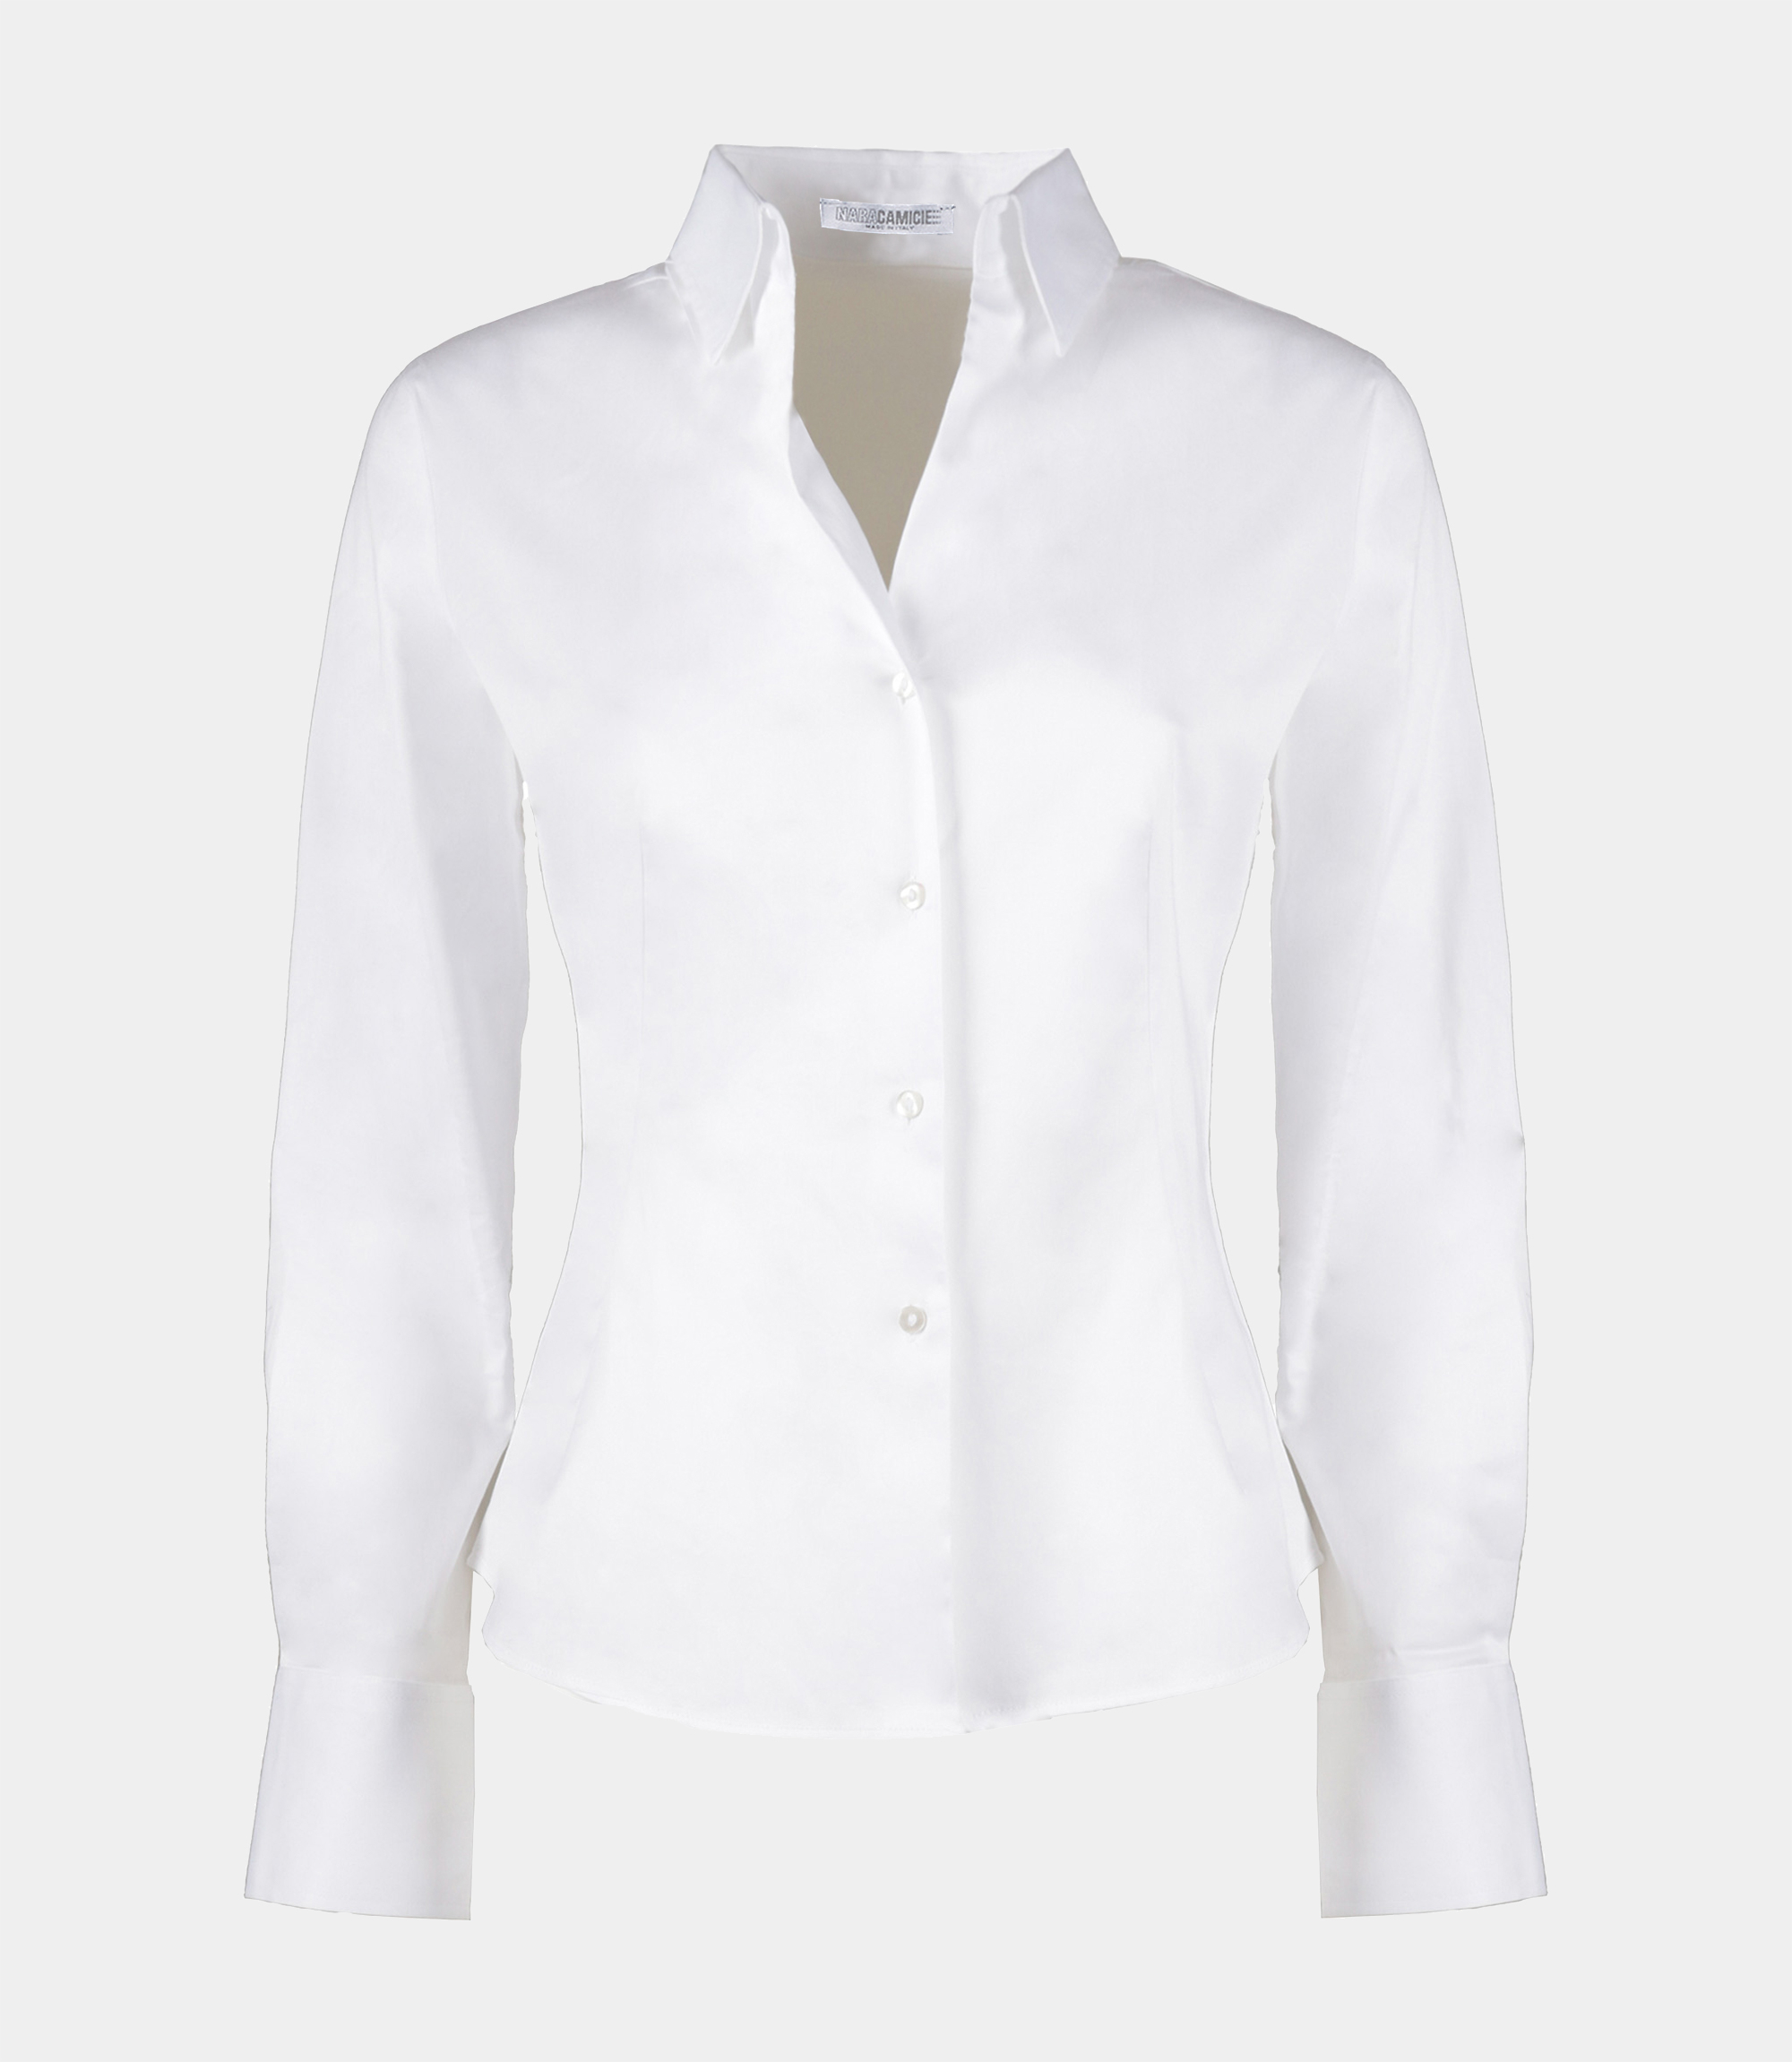 Cleopatra white shirt - SHIRT - NaraMilano